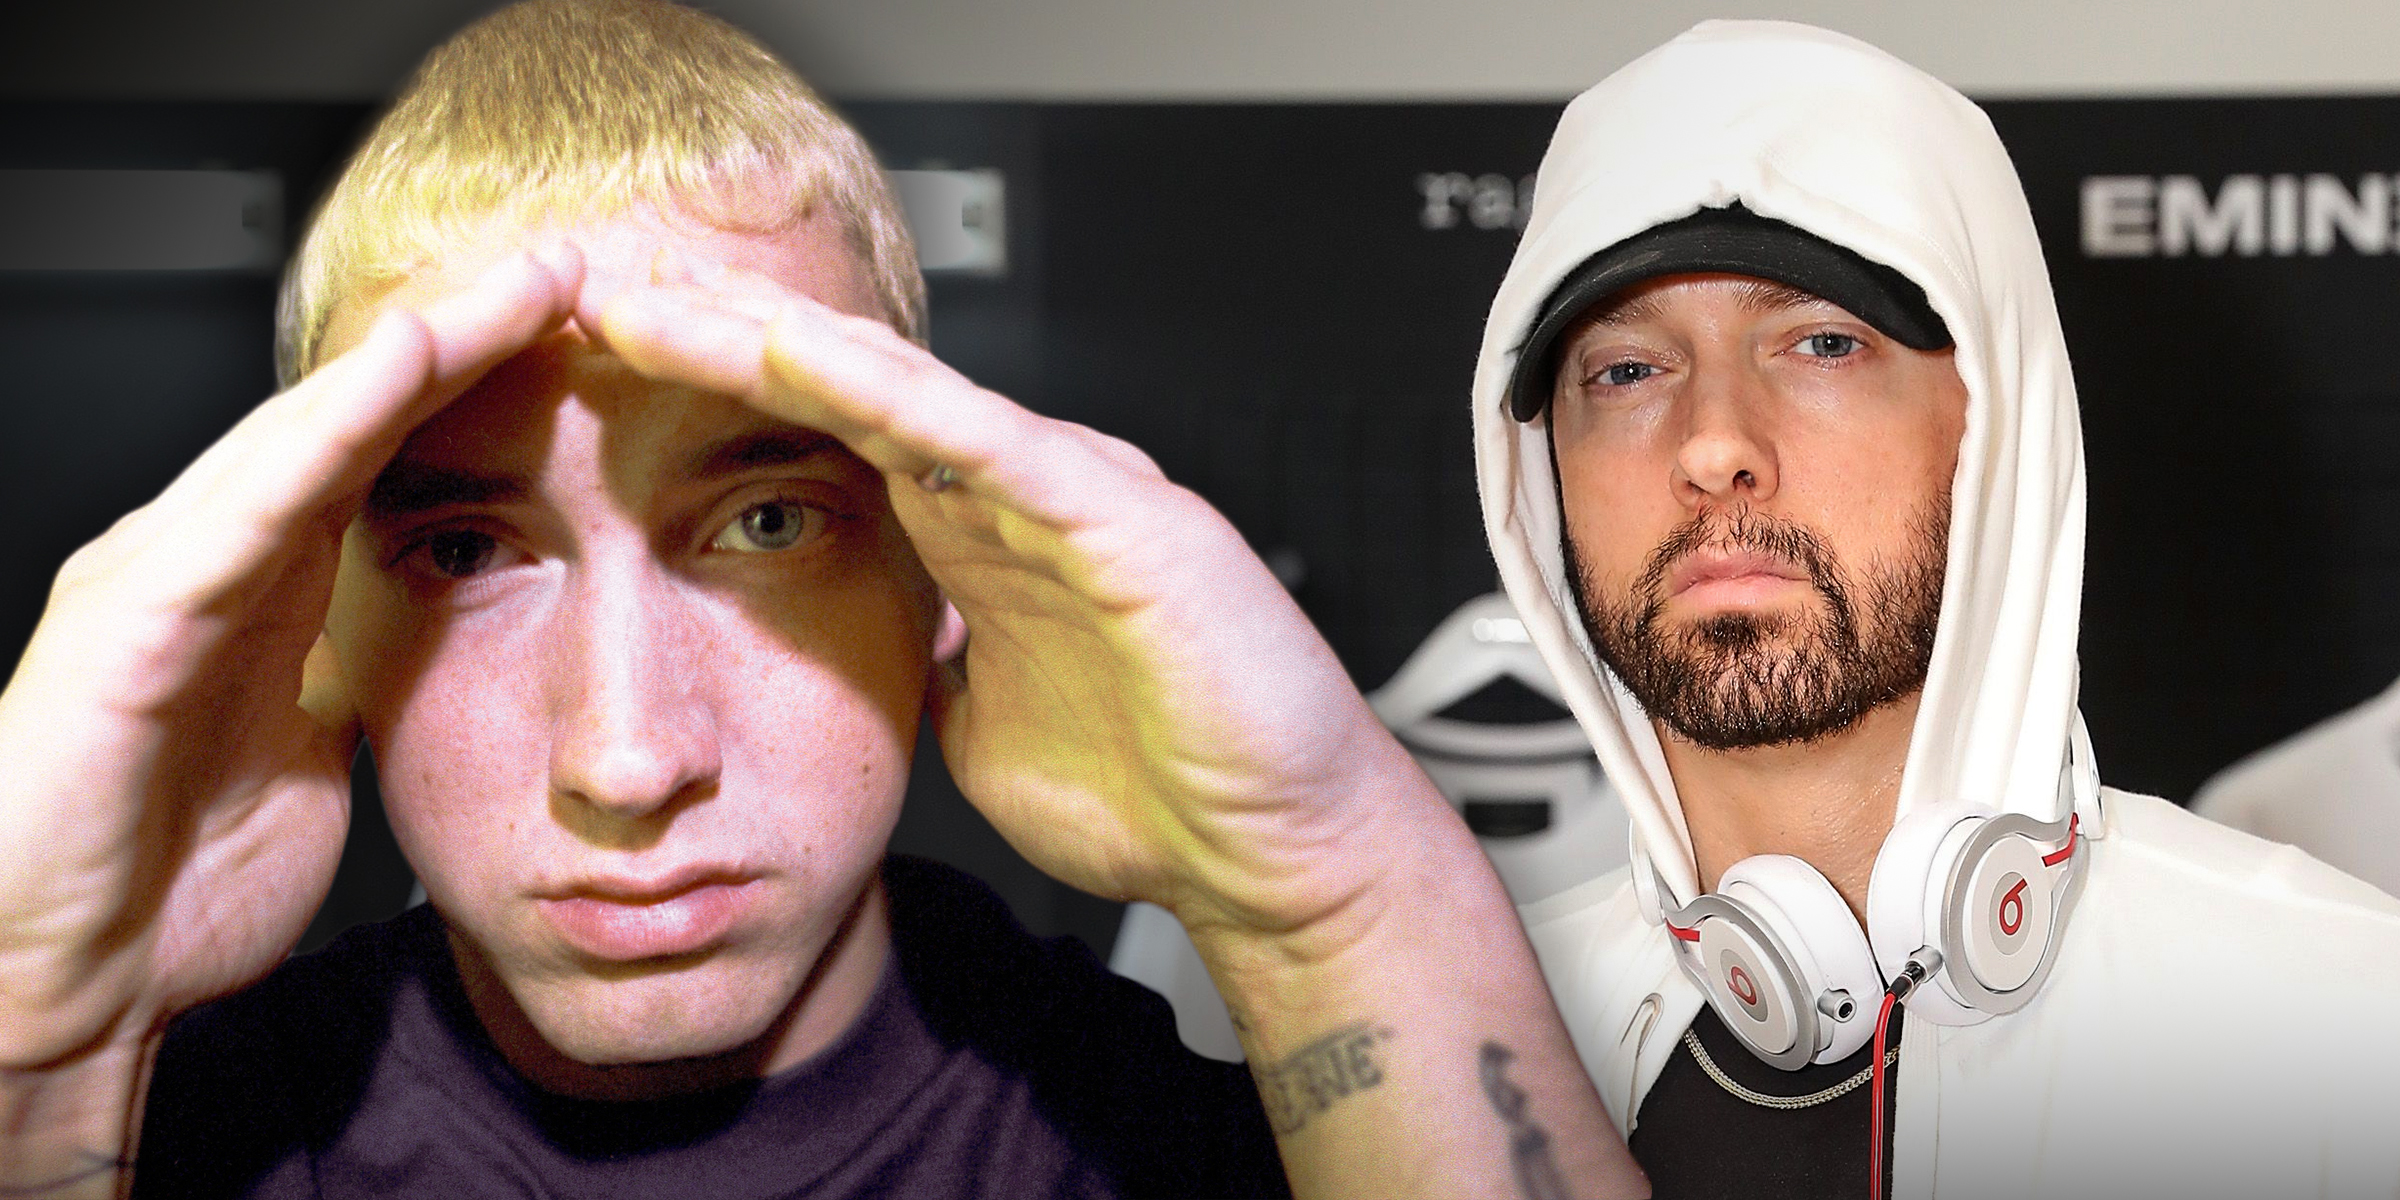 Eminem in 1990 | Eminem in 2018 | Source: Getty Images